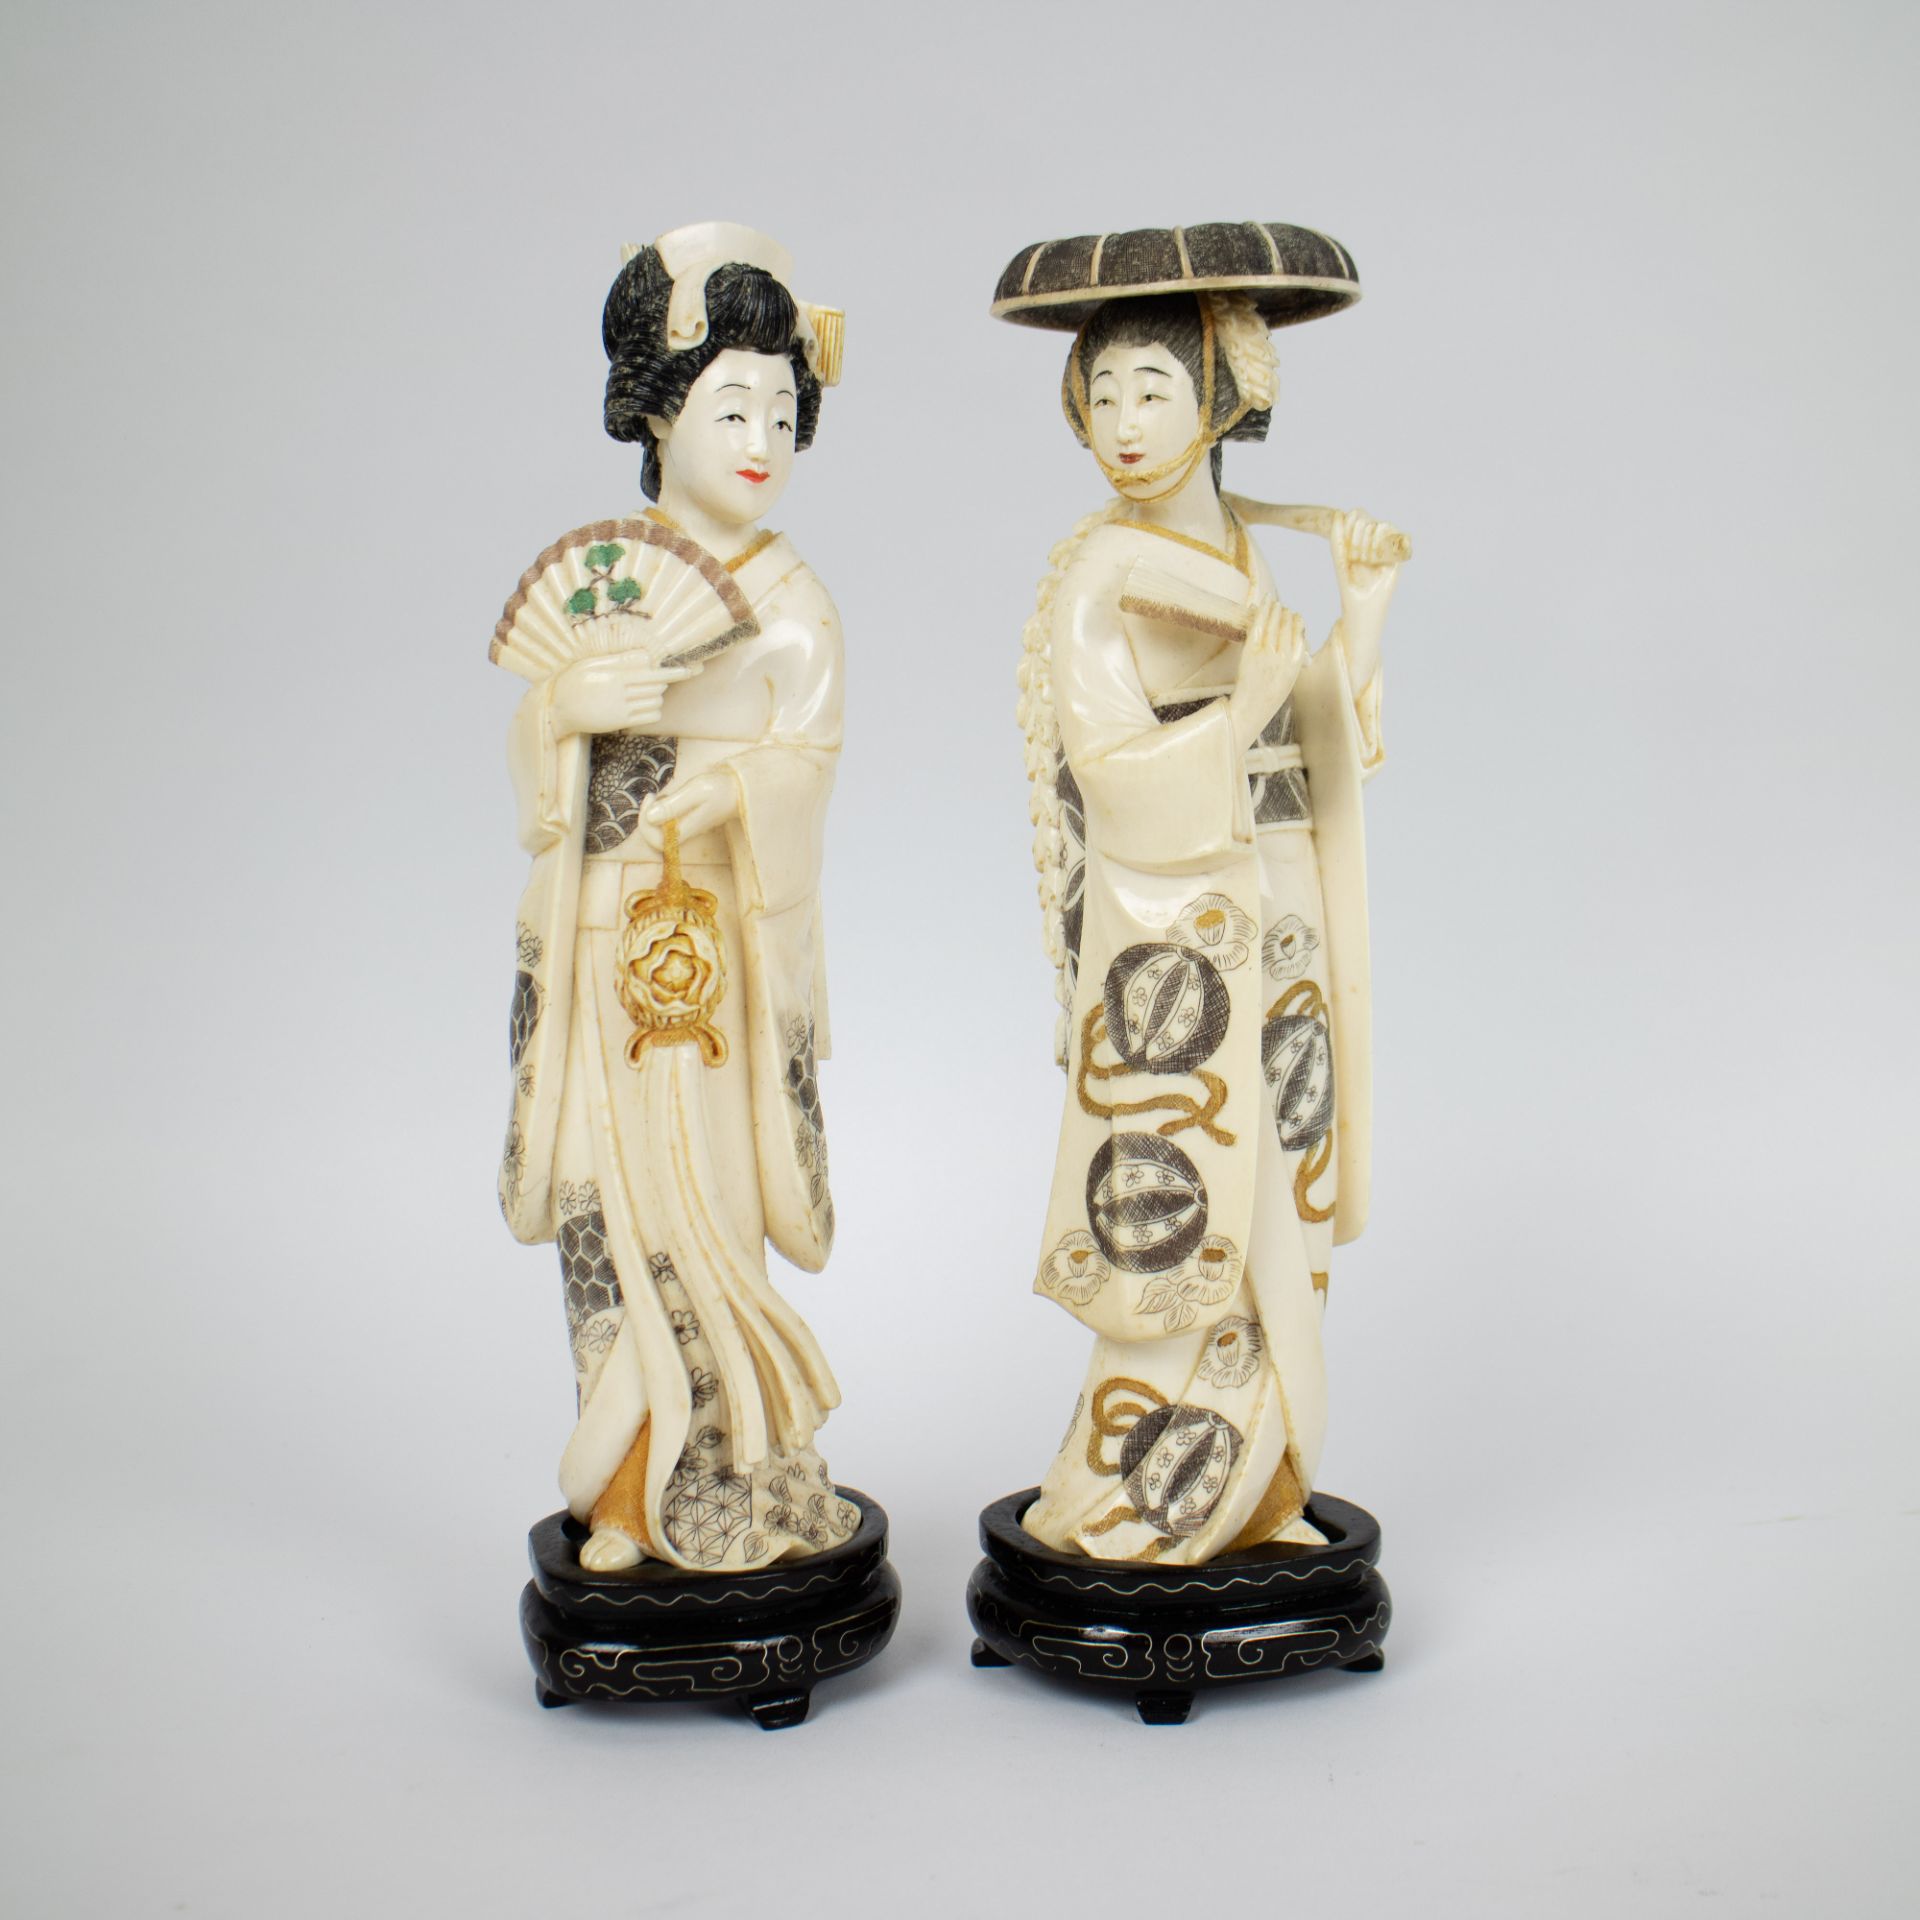 2 Geishas in ivory, Okimono Japan period Meiji 1868-1912